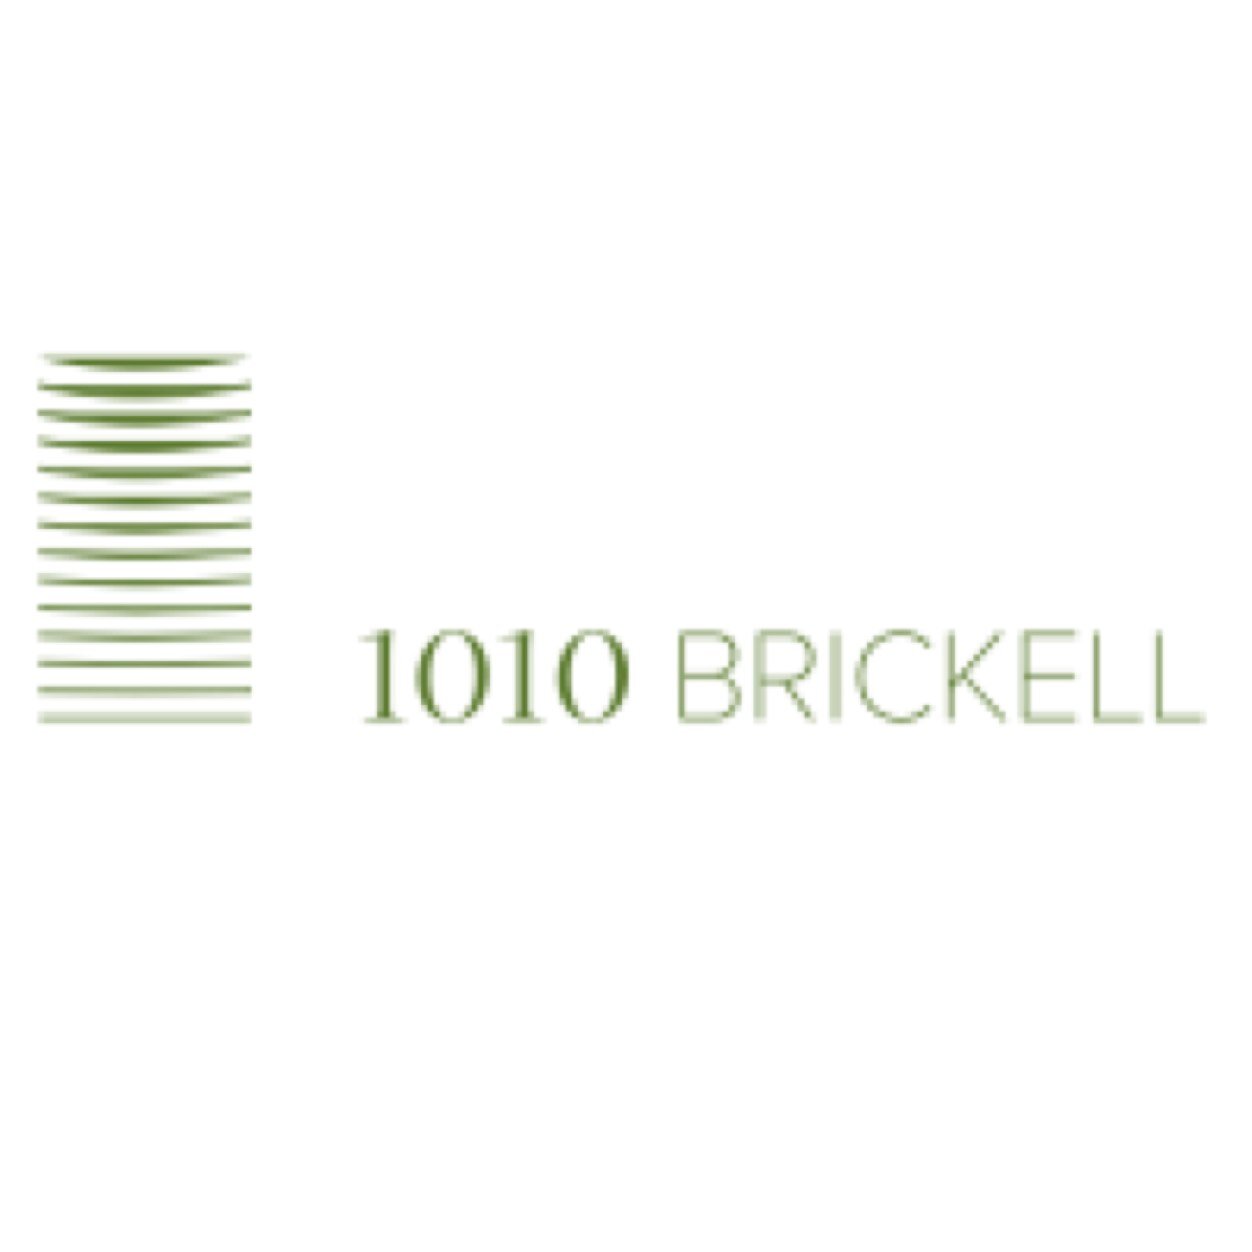 1010 Brickell defines luxury living in Miami.